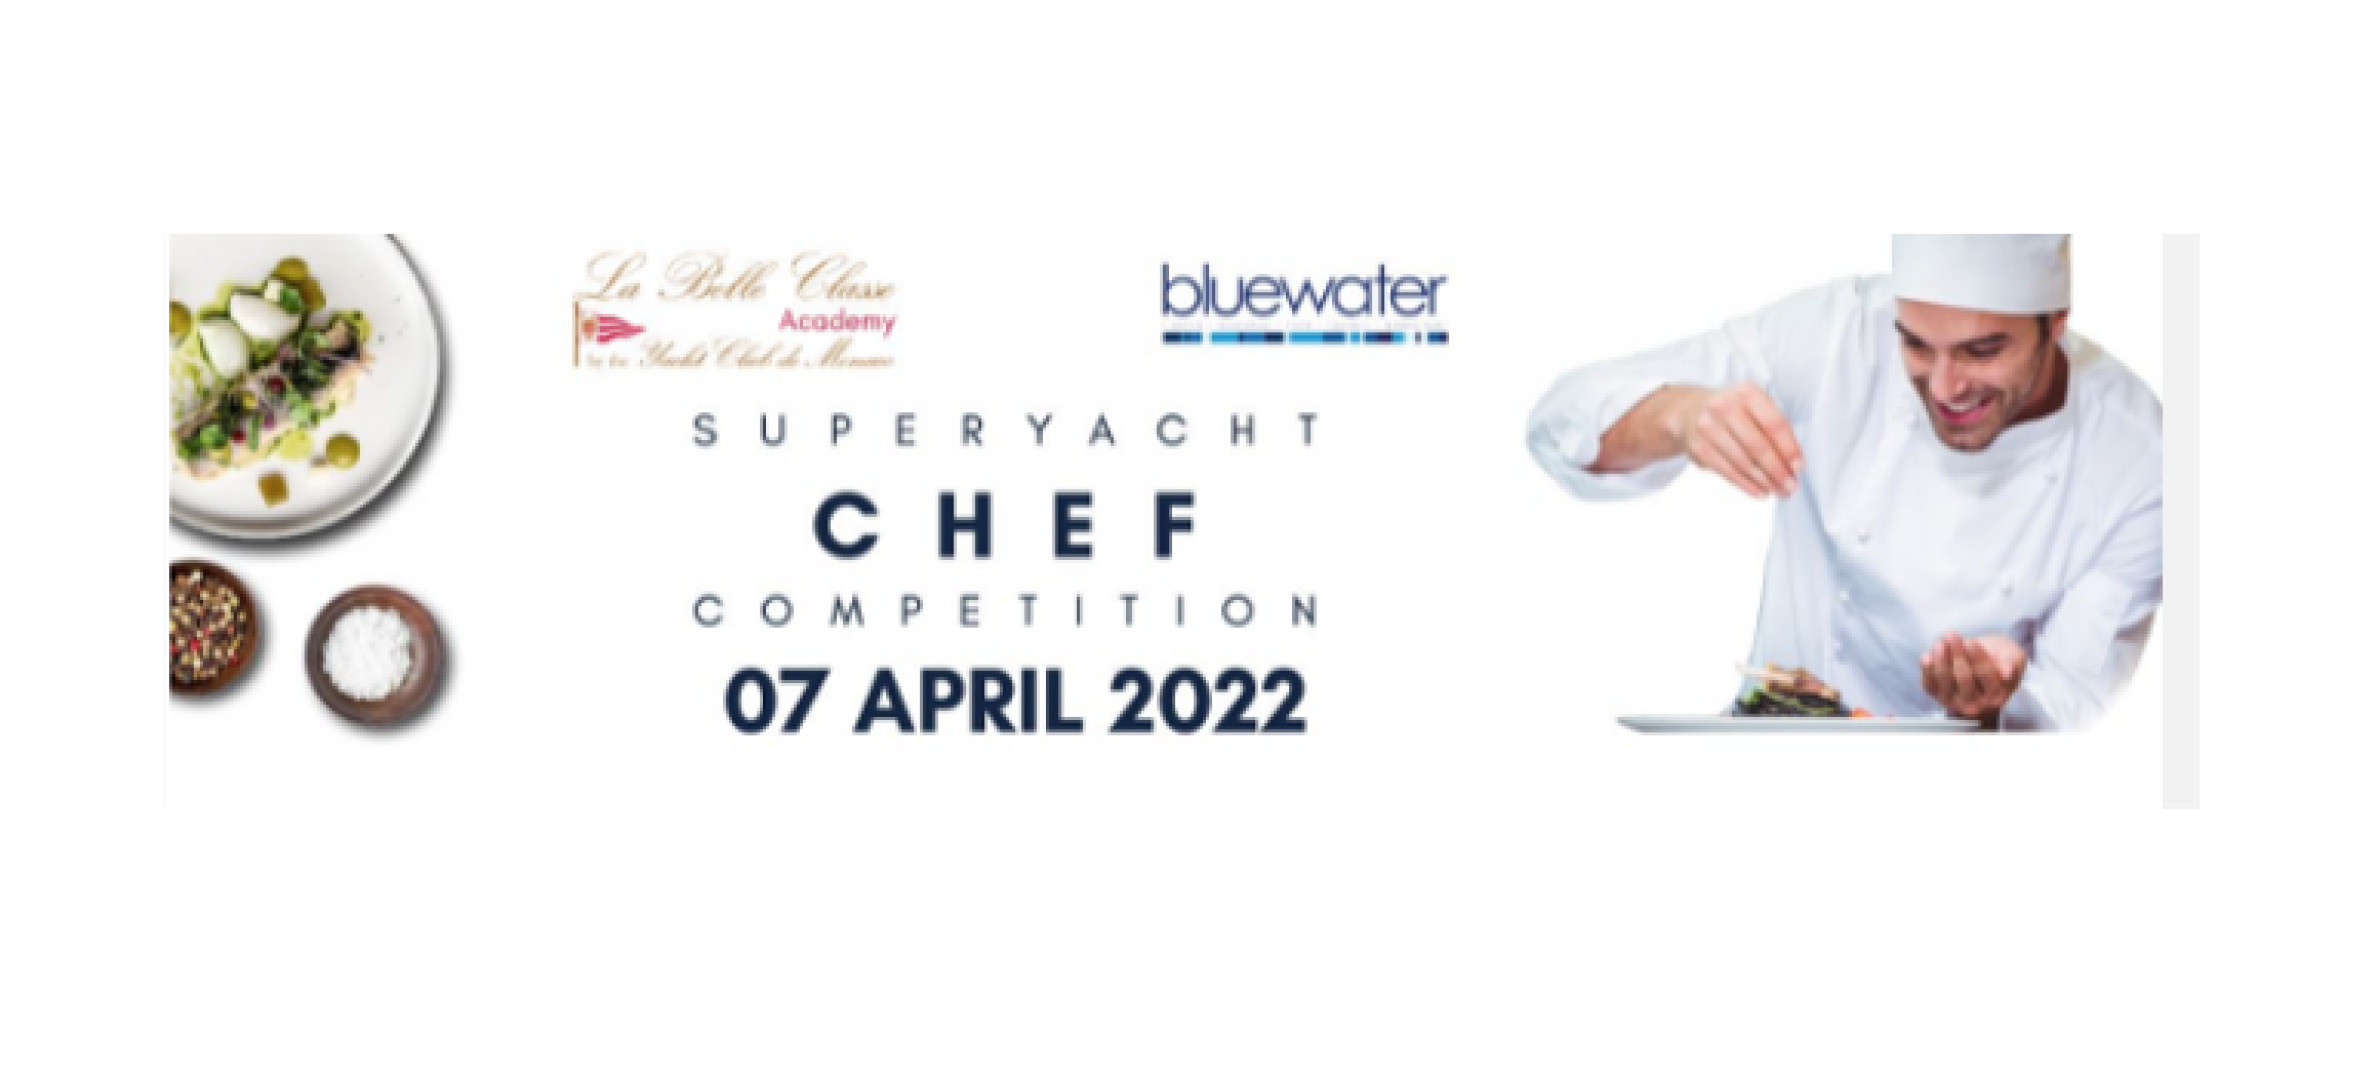 Nine superyacht chefs at the peak of their art